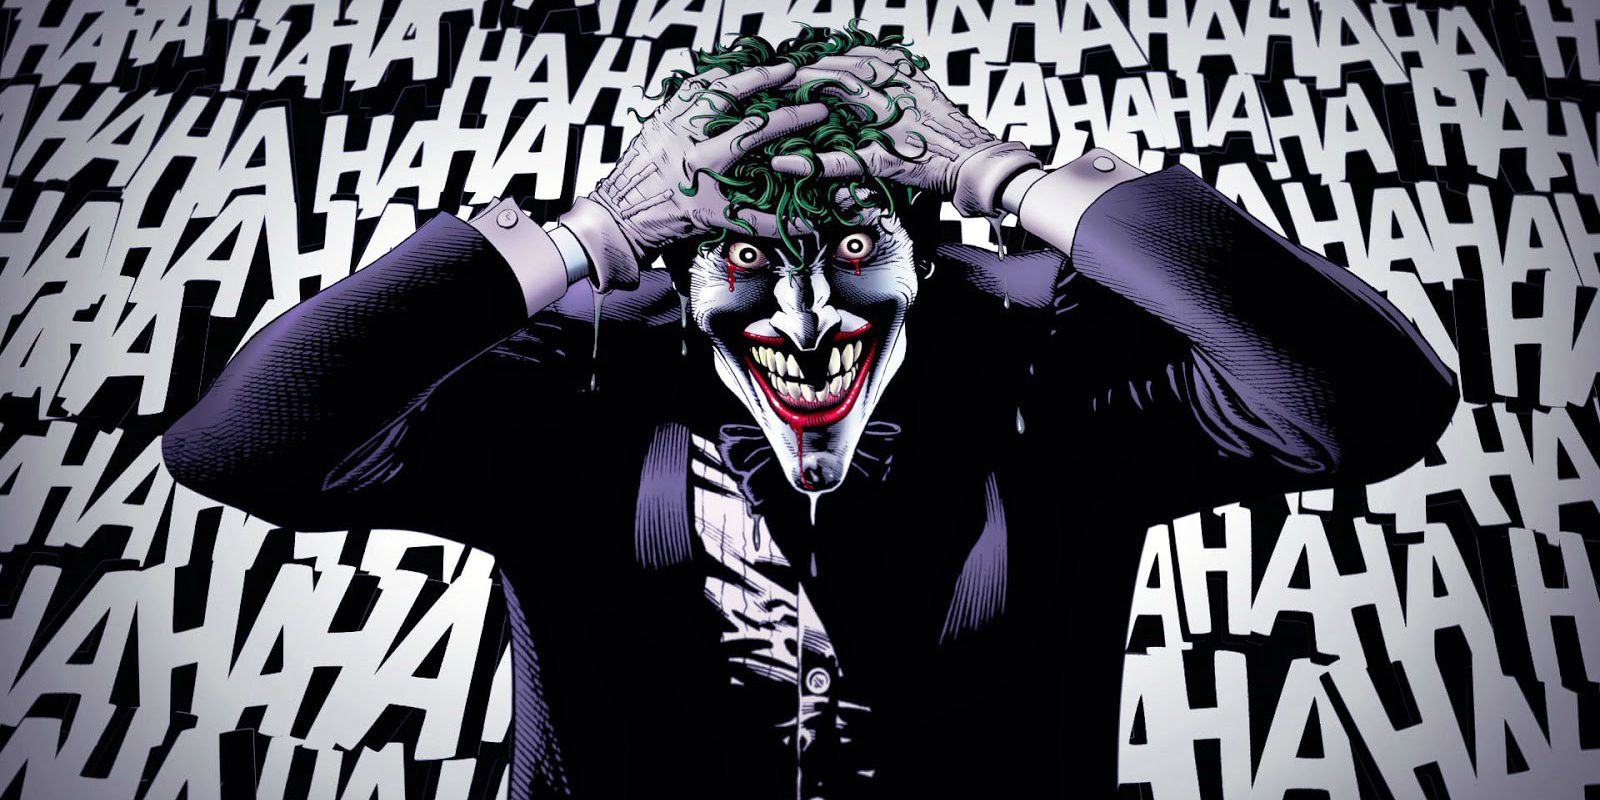 The Joker in The Killing Joke